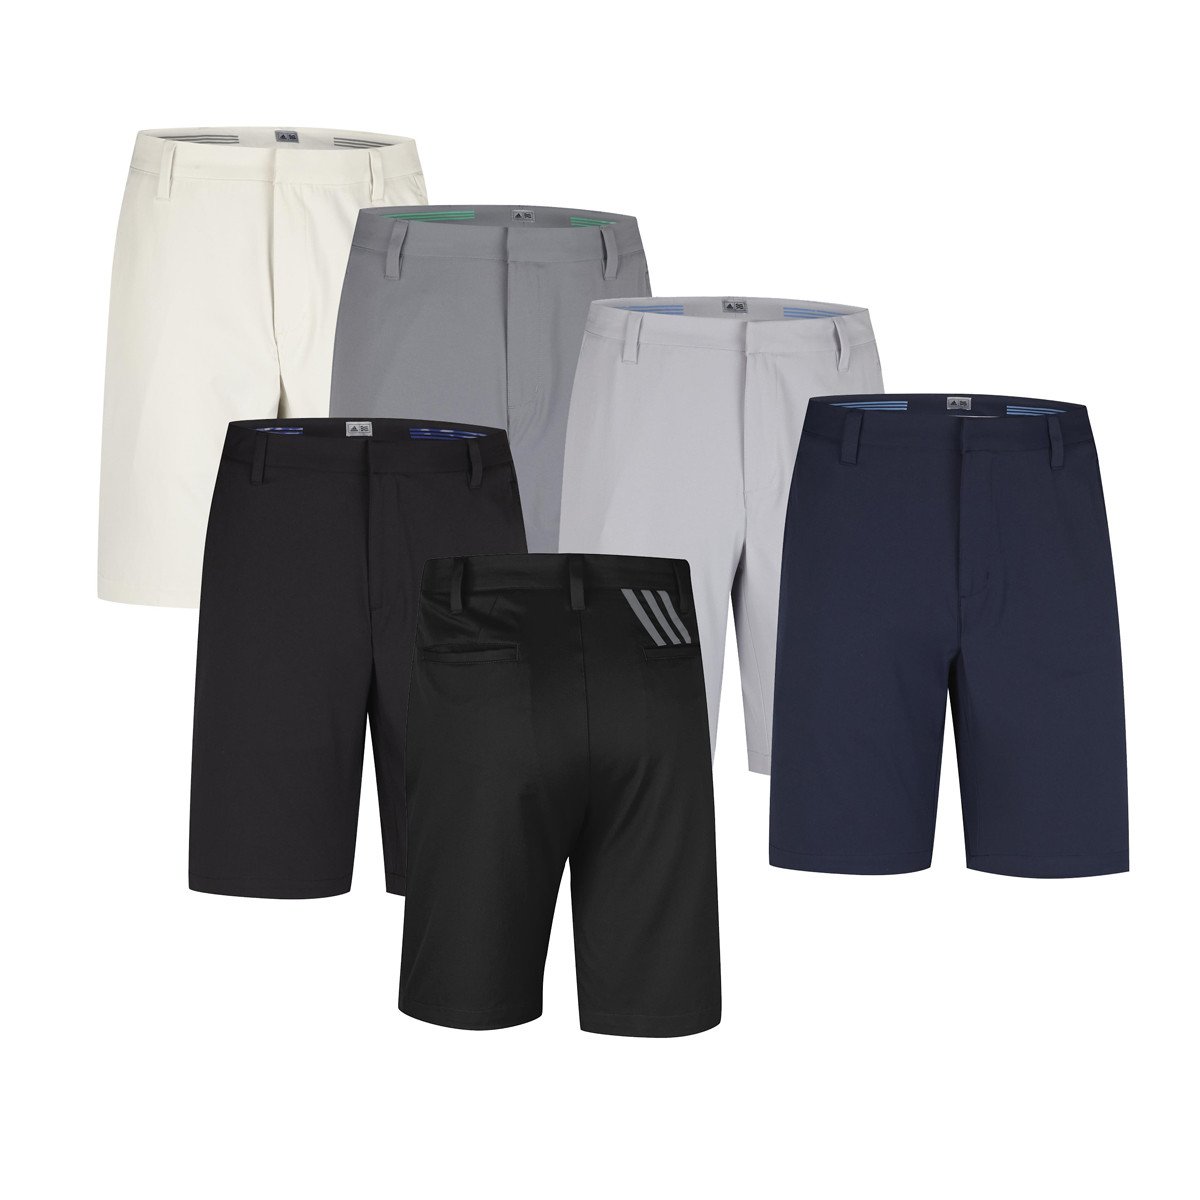 Adidas Purmotion Stretch 3 Stripes Short - Discount Men's Golf Shorts